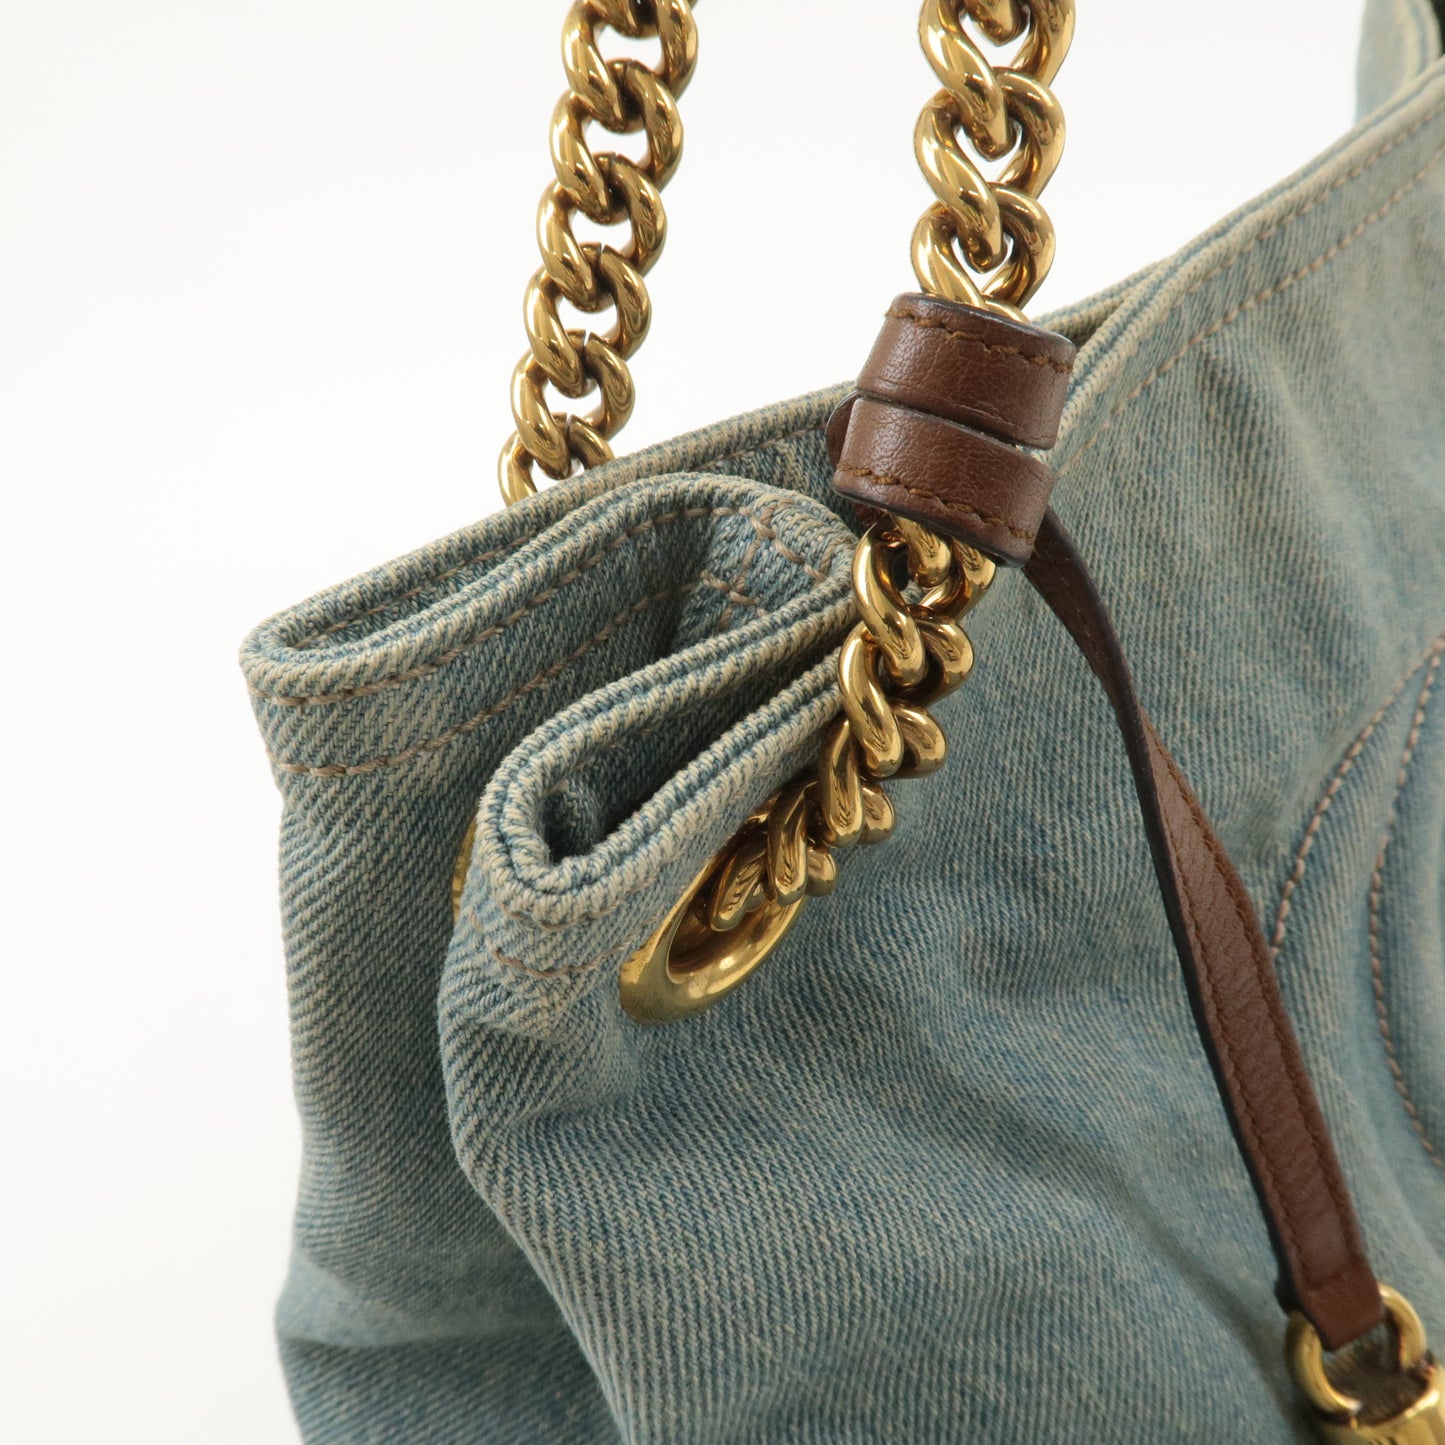 GUCCI SOHO Denim Leather Chain Shoulder Tote Bag Blue 308982